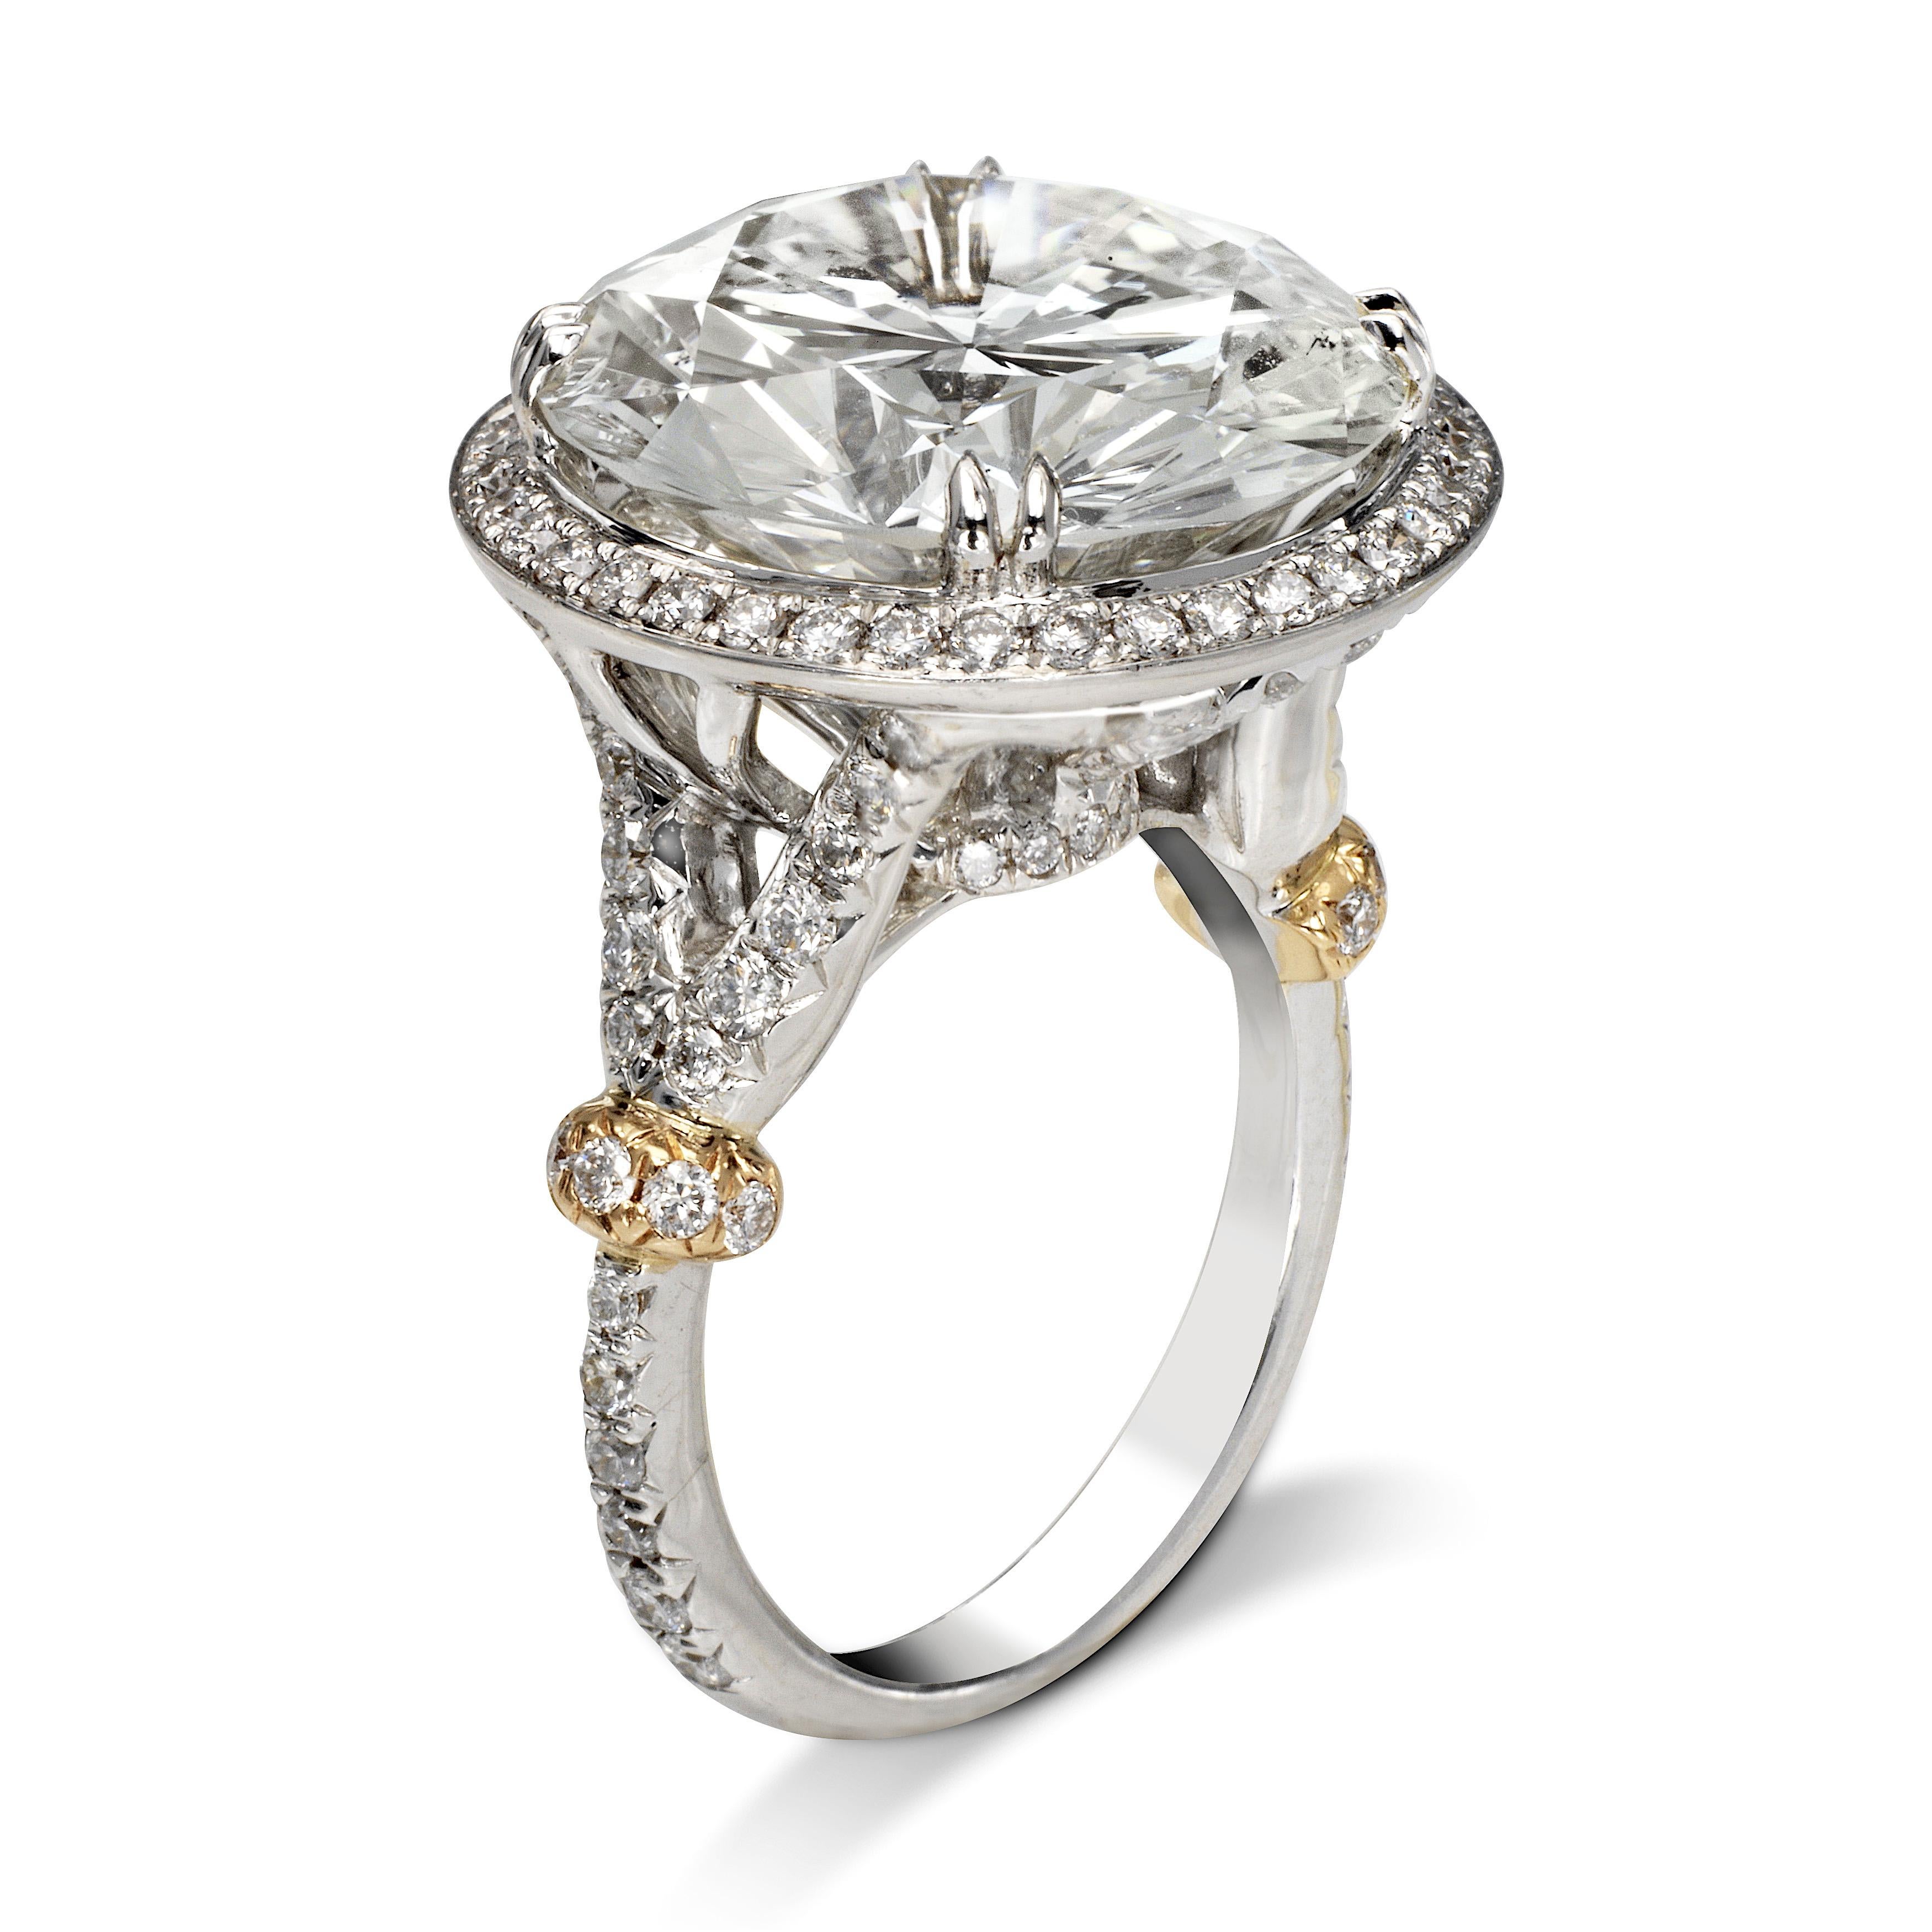 16 carat diamond ring